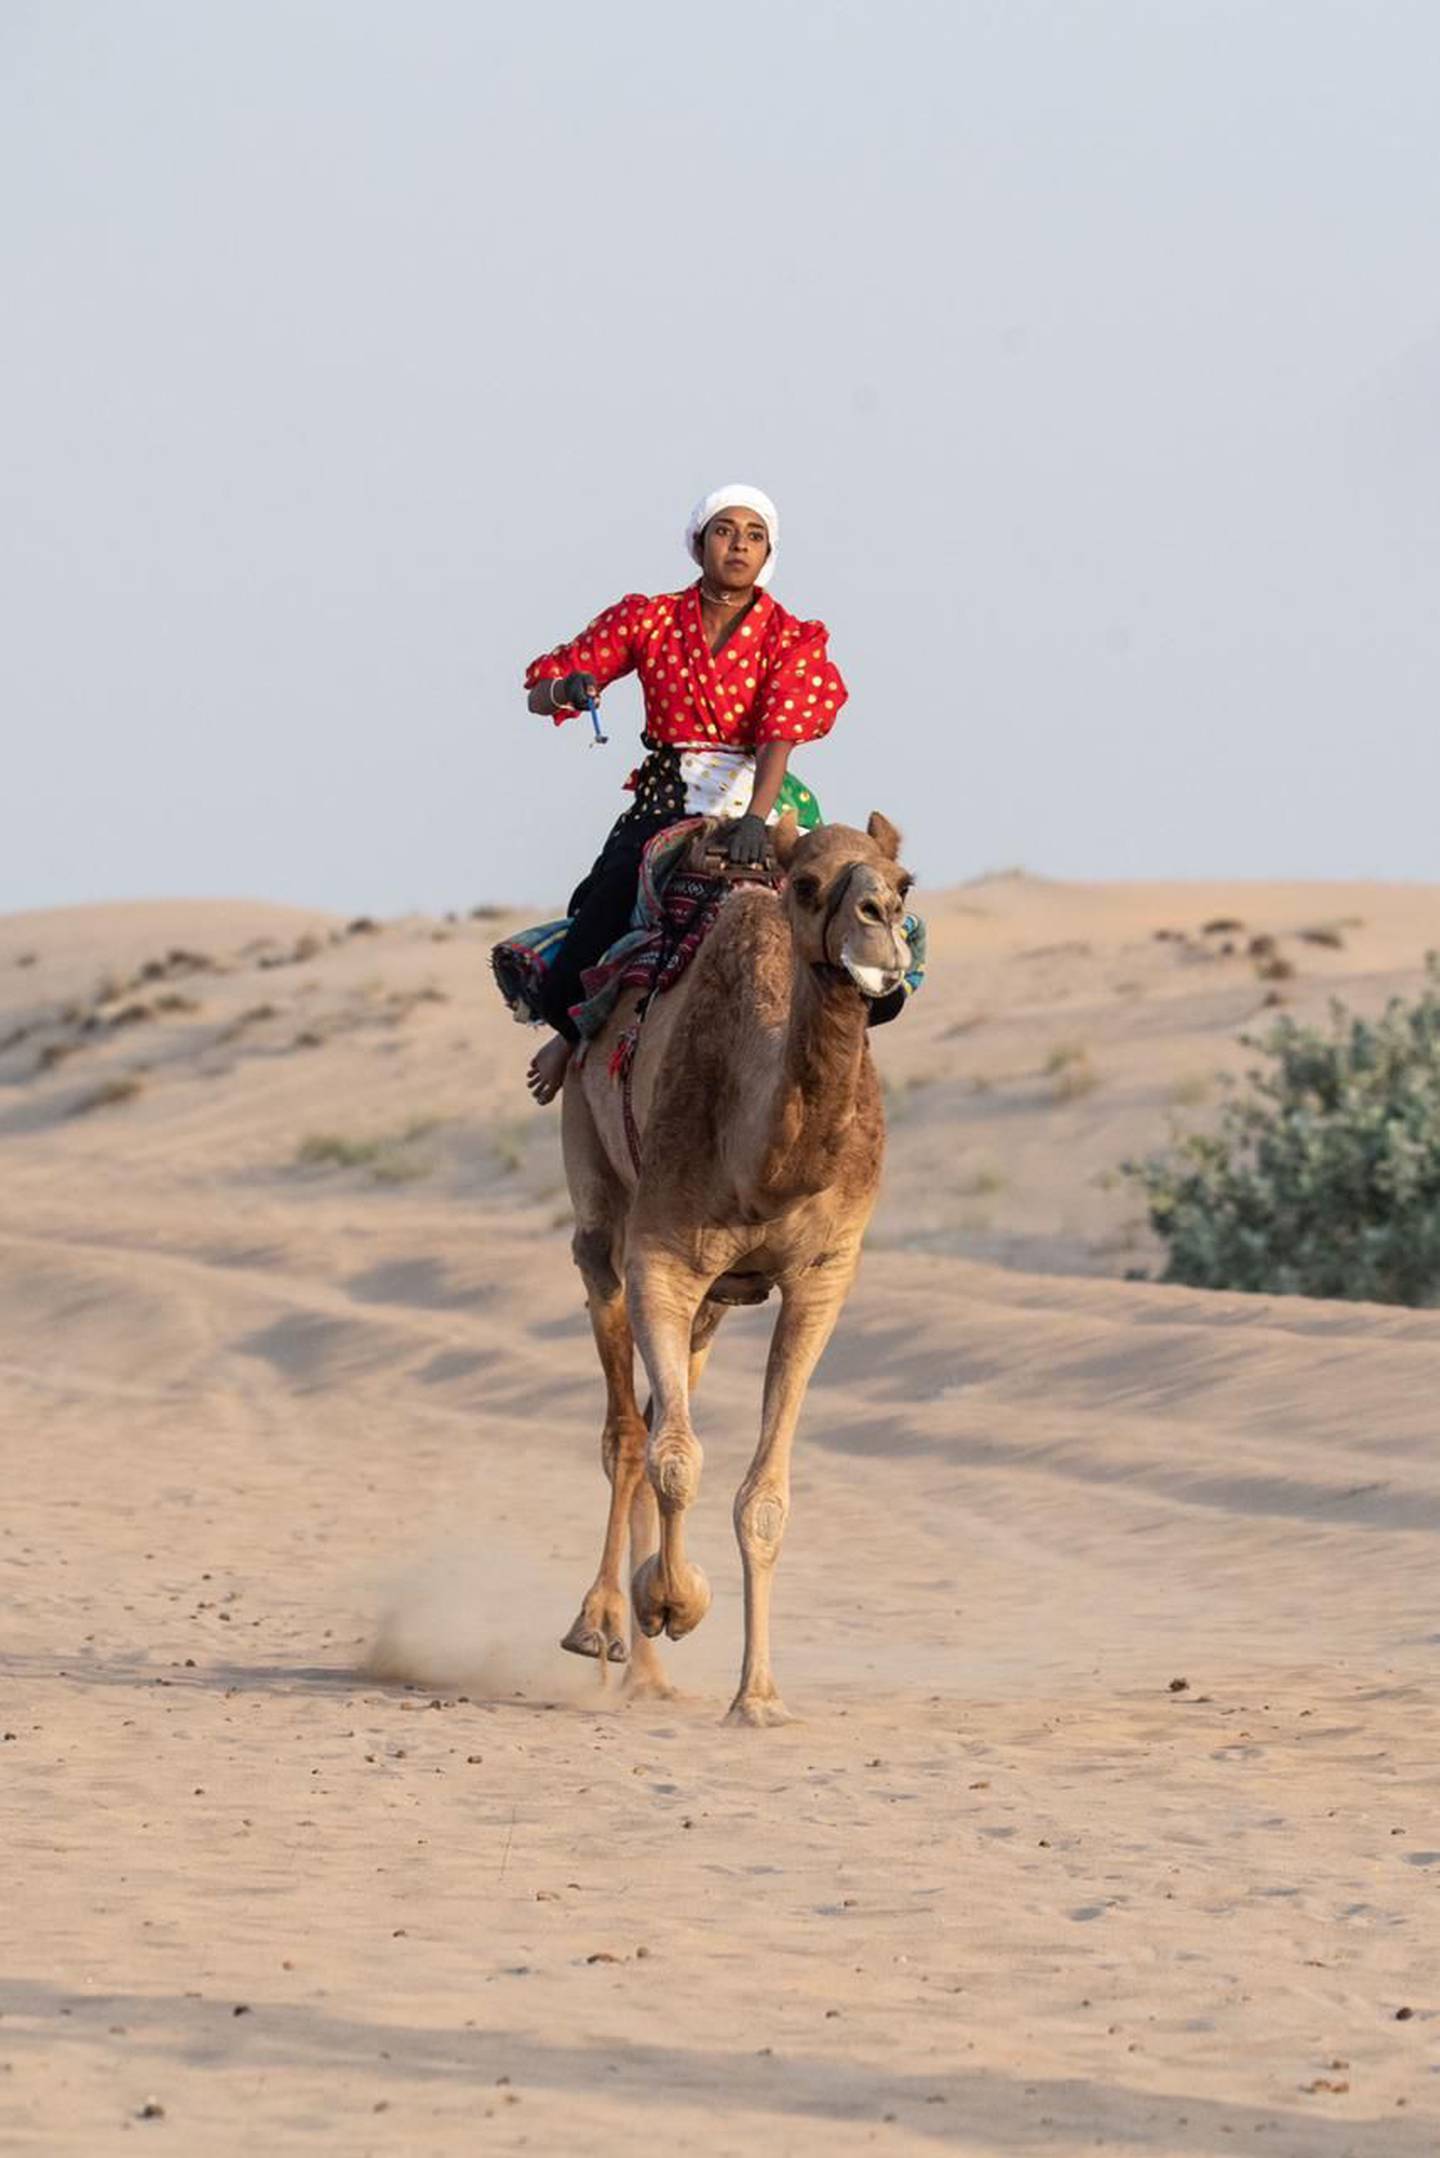 Ms Al Blooshi trains with camels at the Al Marmoom Race Track. Photo: Khawla Al Blooshi